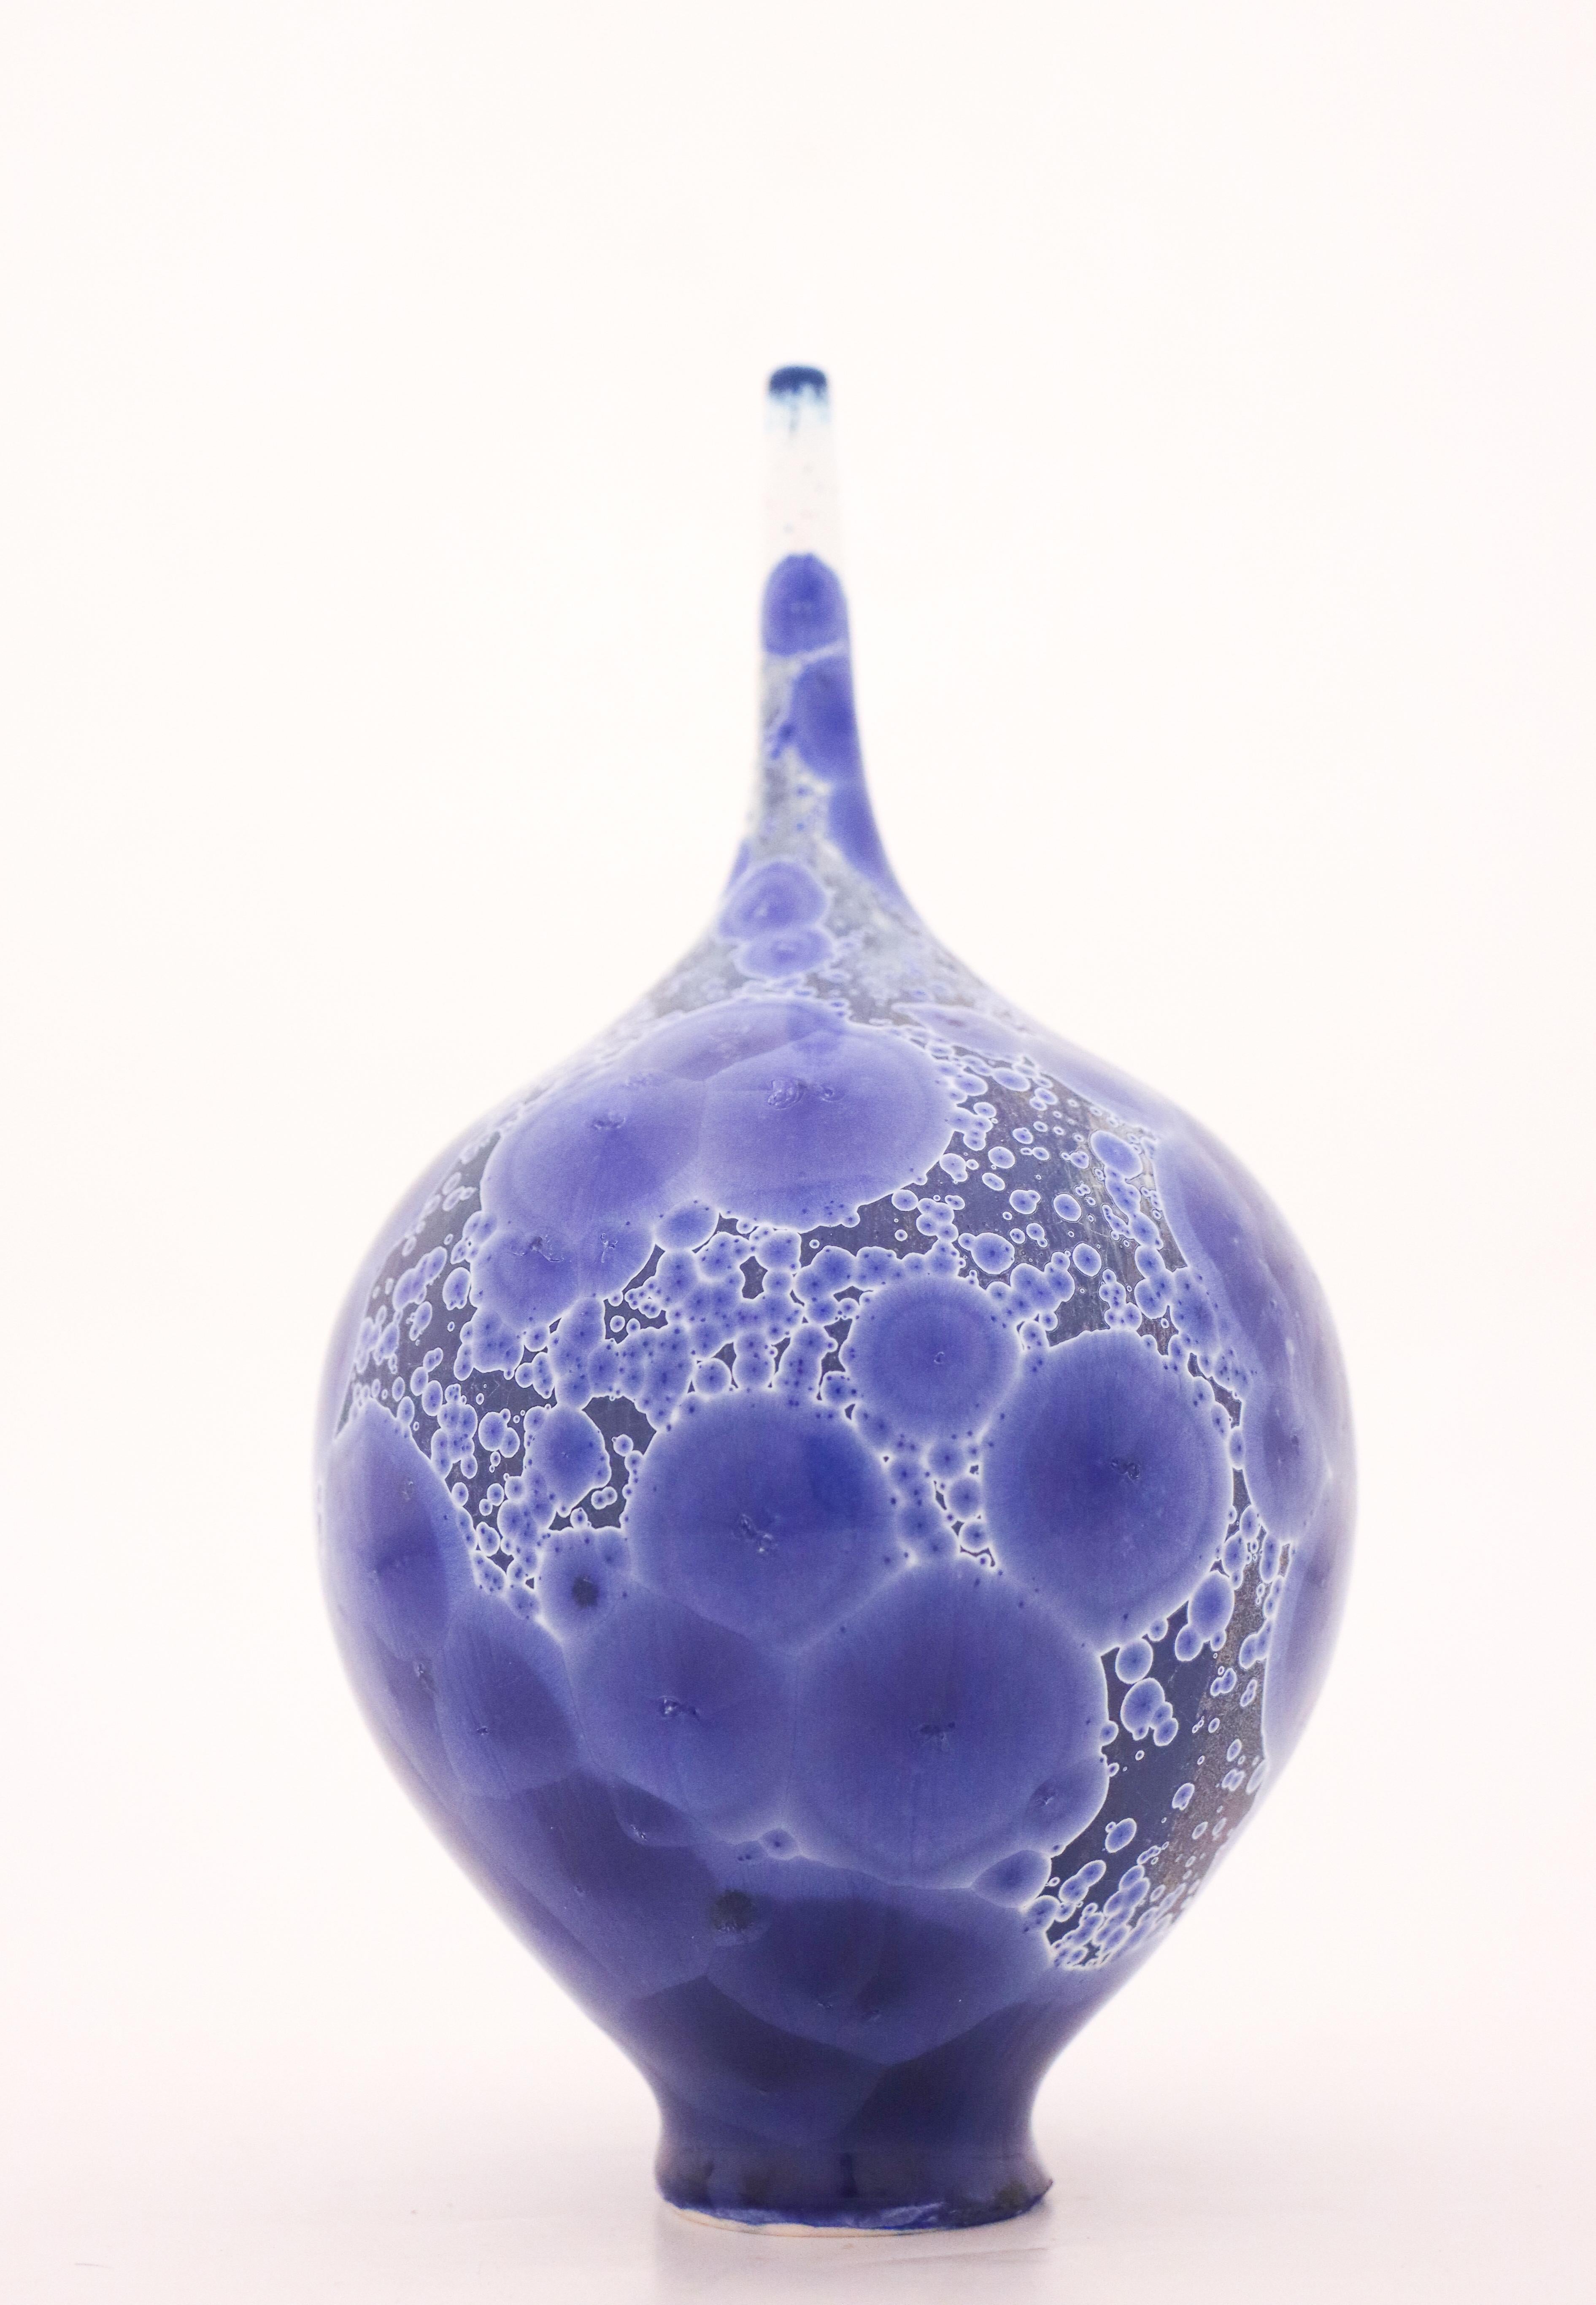 Vase by Isak Isaksson, Blue & White Glaze, Contemporary Swedish Ceramicist 3